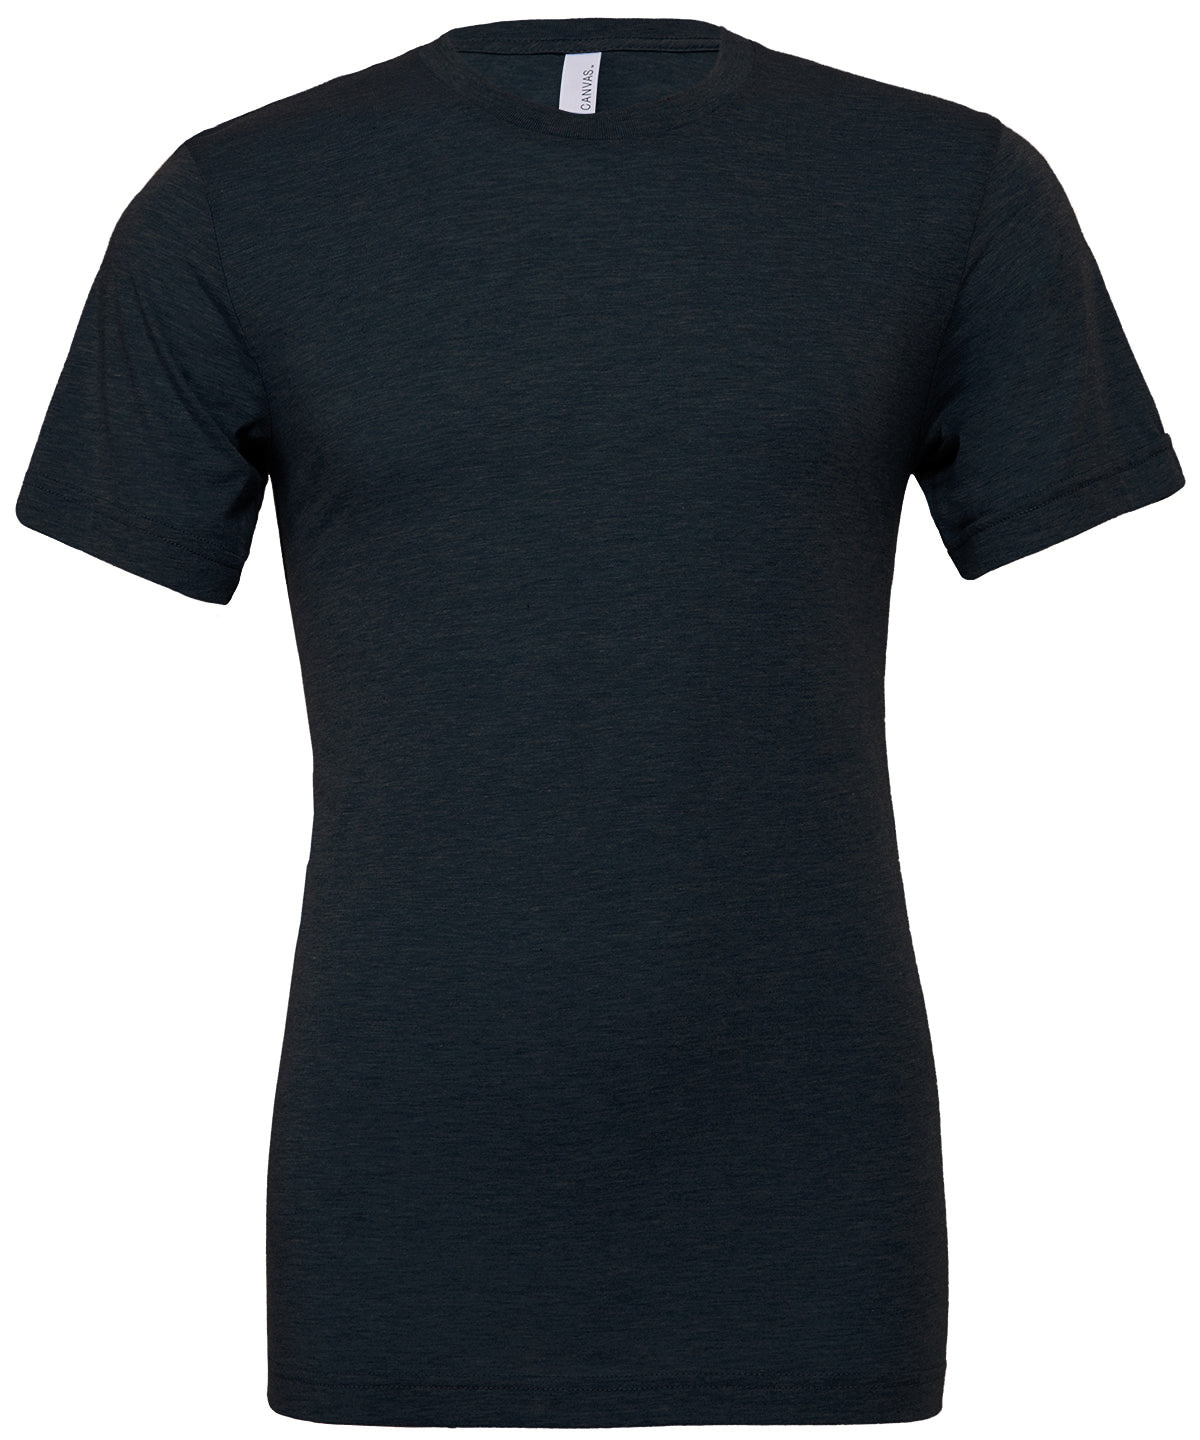 Personalised T-Shirts - Dark Brown Bella Canvas Unisex triblend crew neck t-shirt